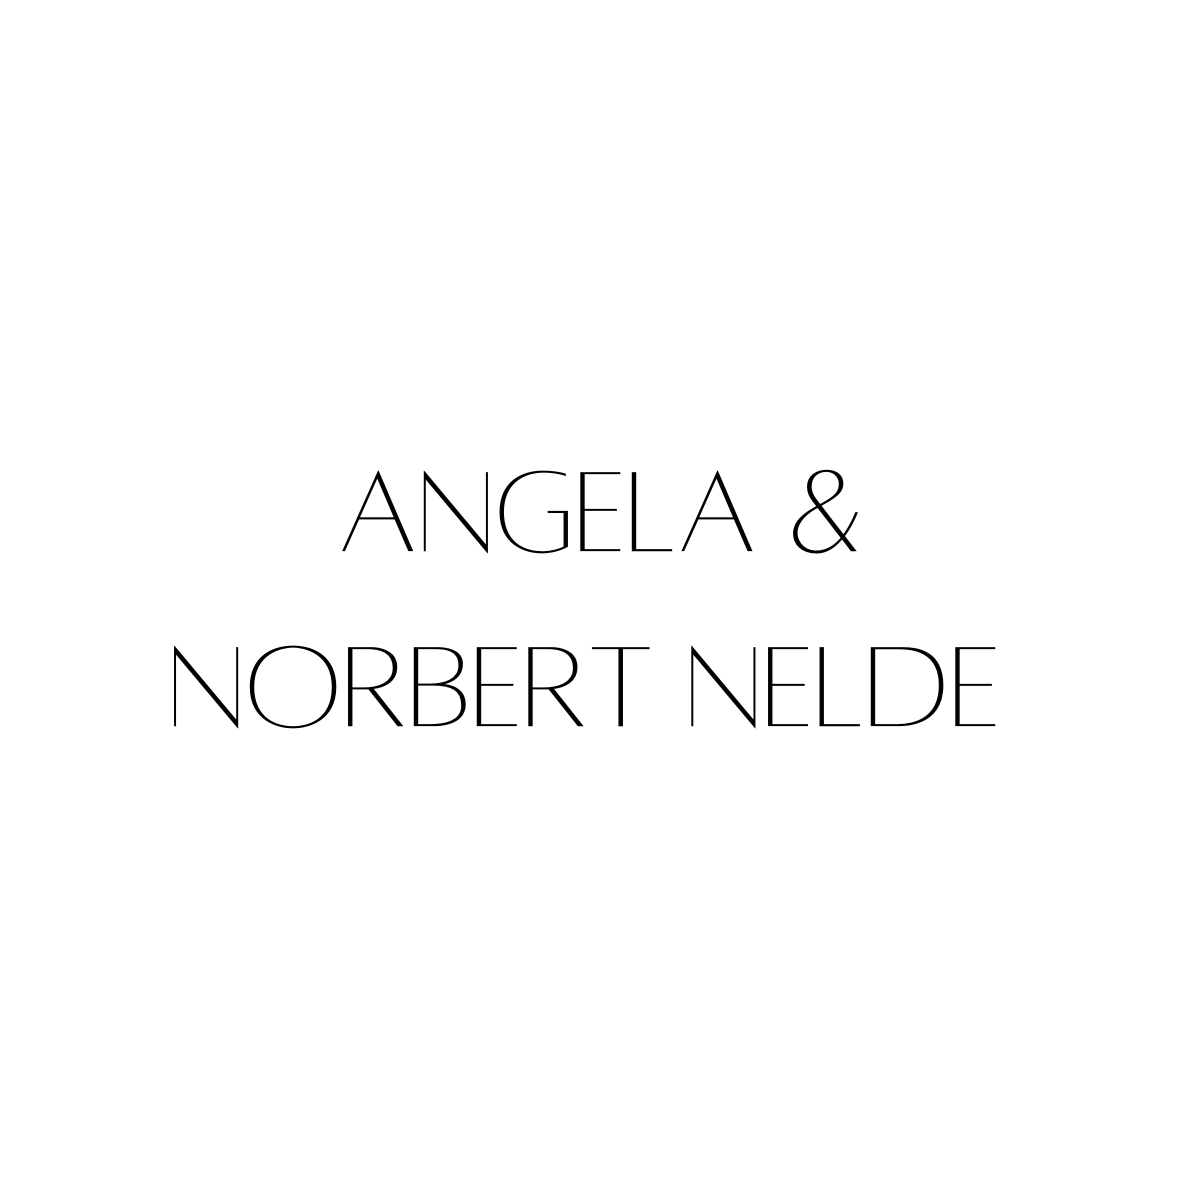 Angela & Norbert Nelde_square.png